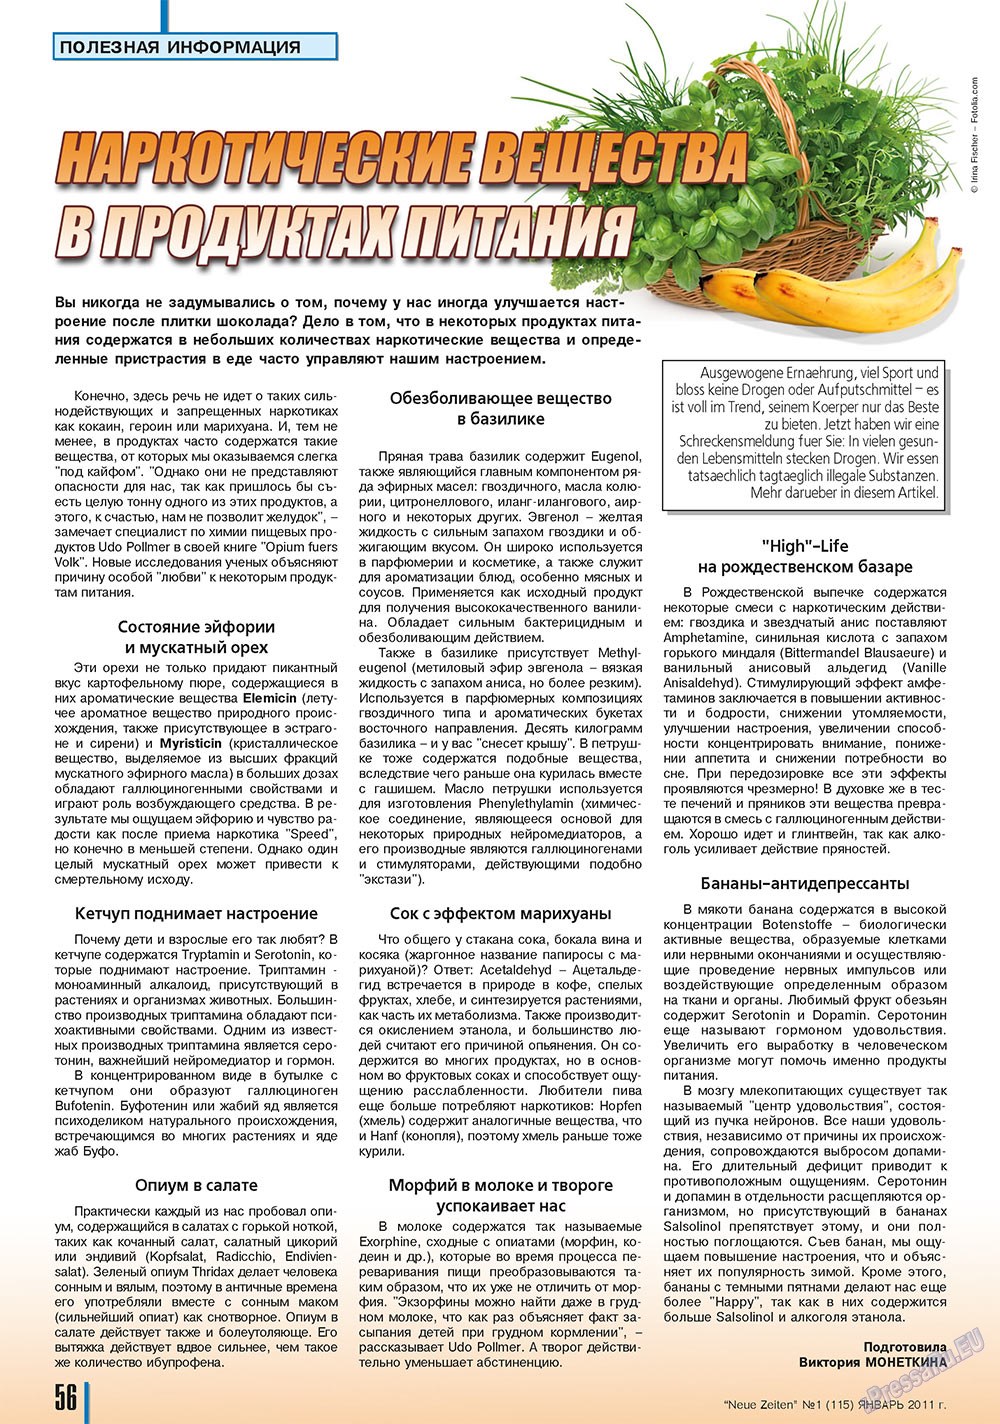 Neue Zeiten (журнал). 2011 год, номер 1, стр. 58